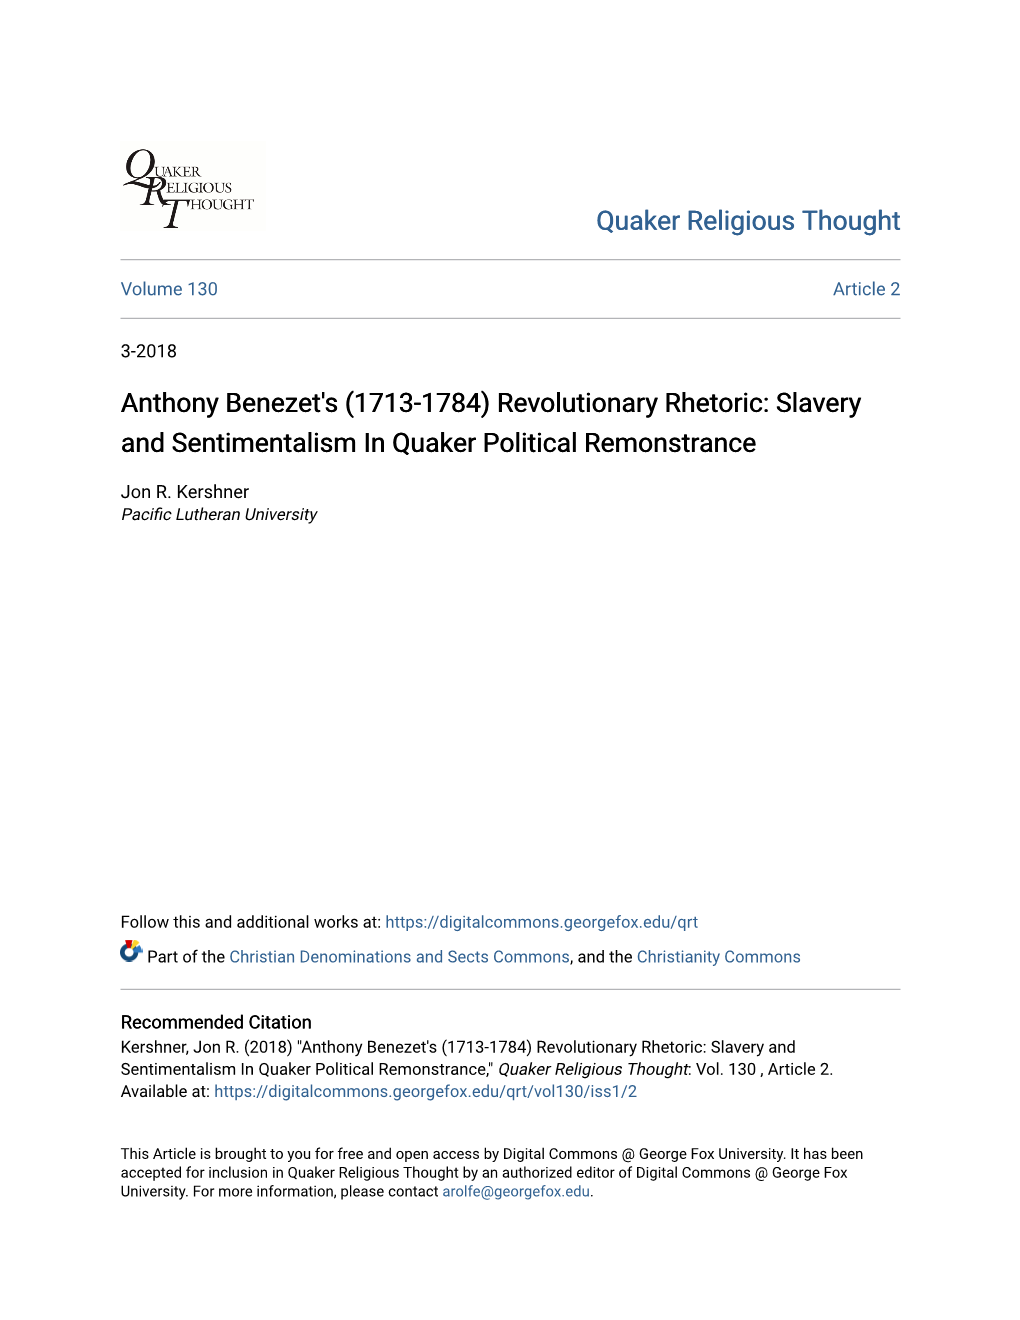 Anthony Benezet's (1713-1784) Revolutionary Rhetoric: Slavery and Sentimentalism in Quaker Political Remonstrance